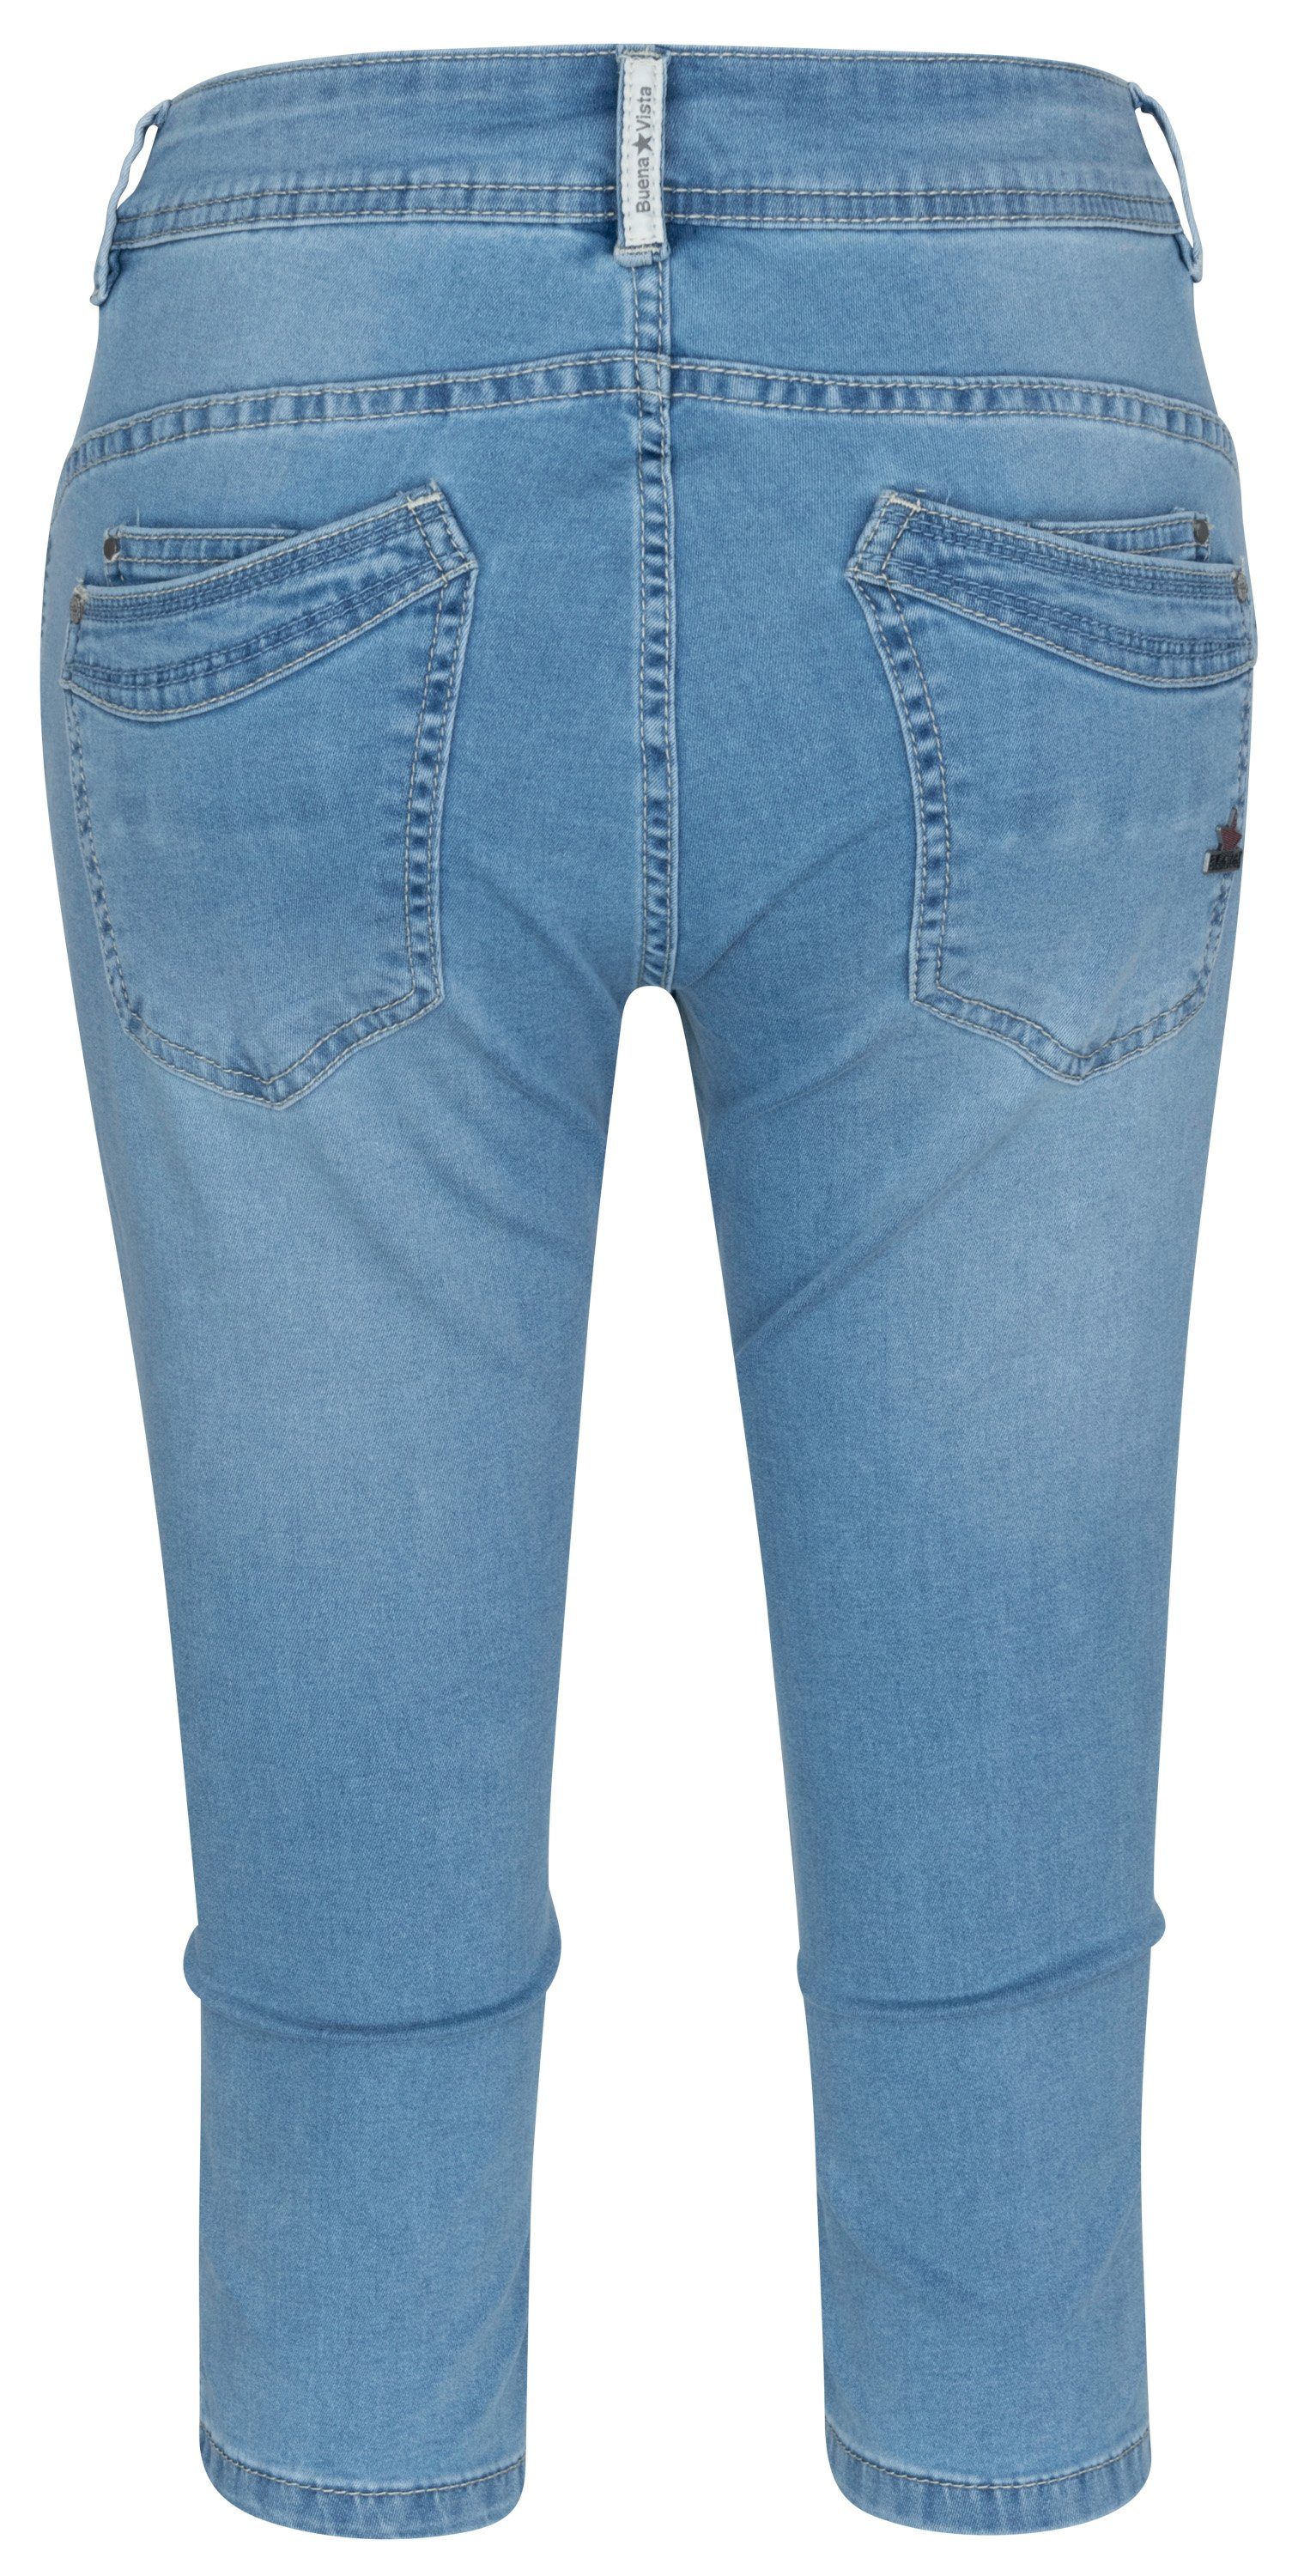 B5232 Buena 2304 charming blue - Stretch-Jeans CAPRI 102.8565 VISTA BUENA MALIBU Cozy Vista